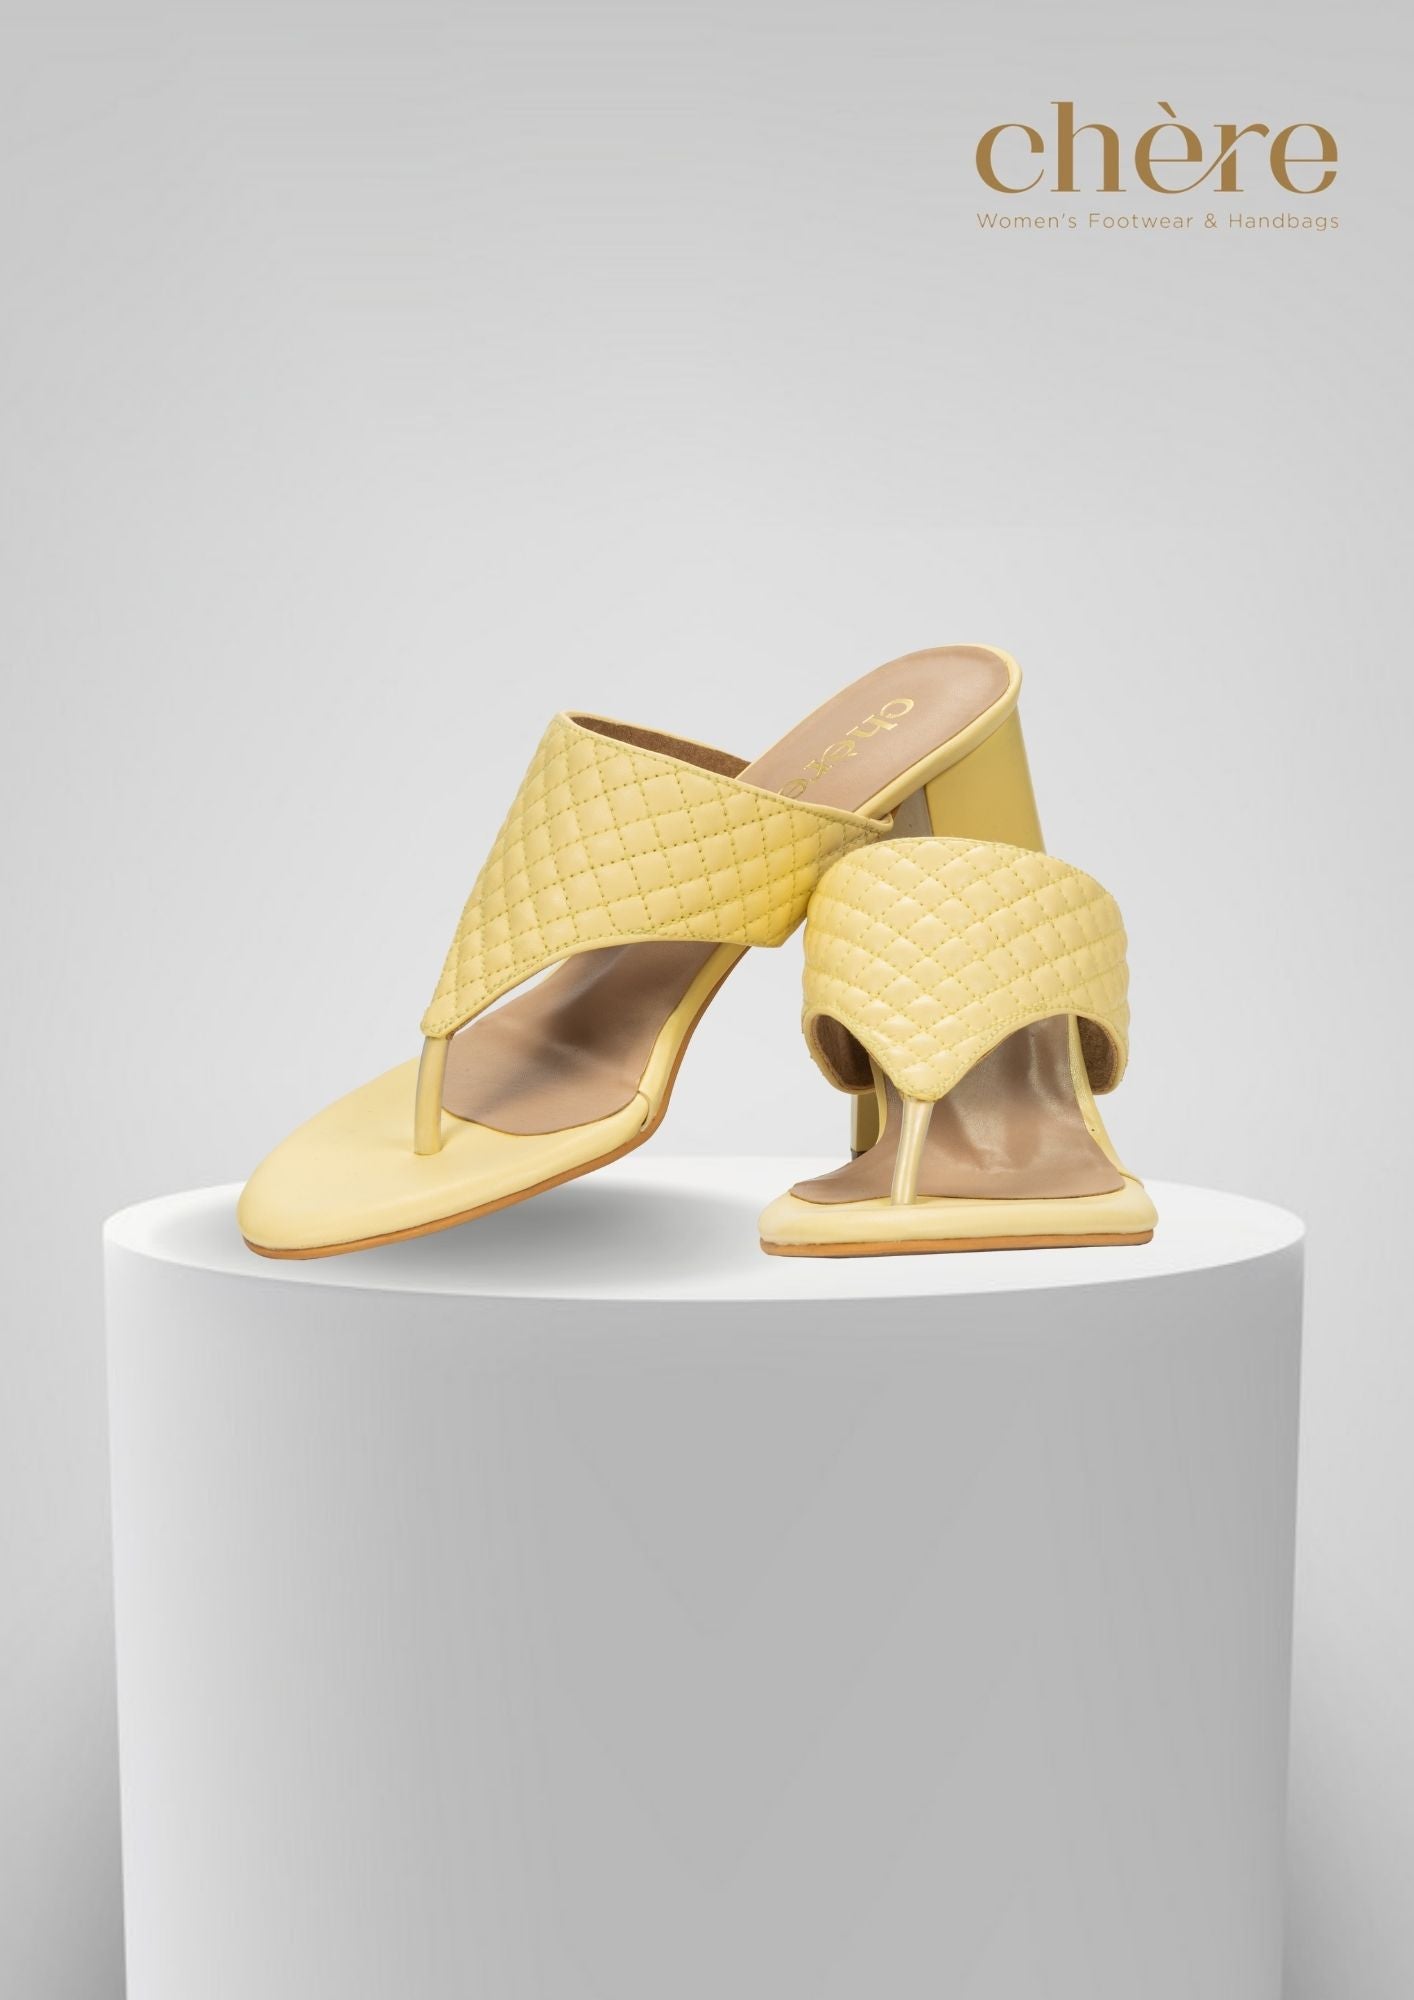 Yellow High Heel Women Shoes On Stock Photo 607193444 | Shutterstock